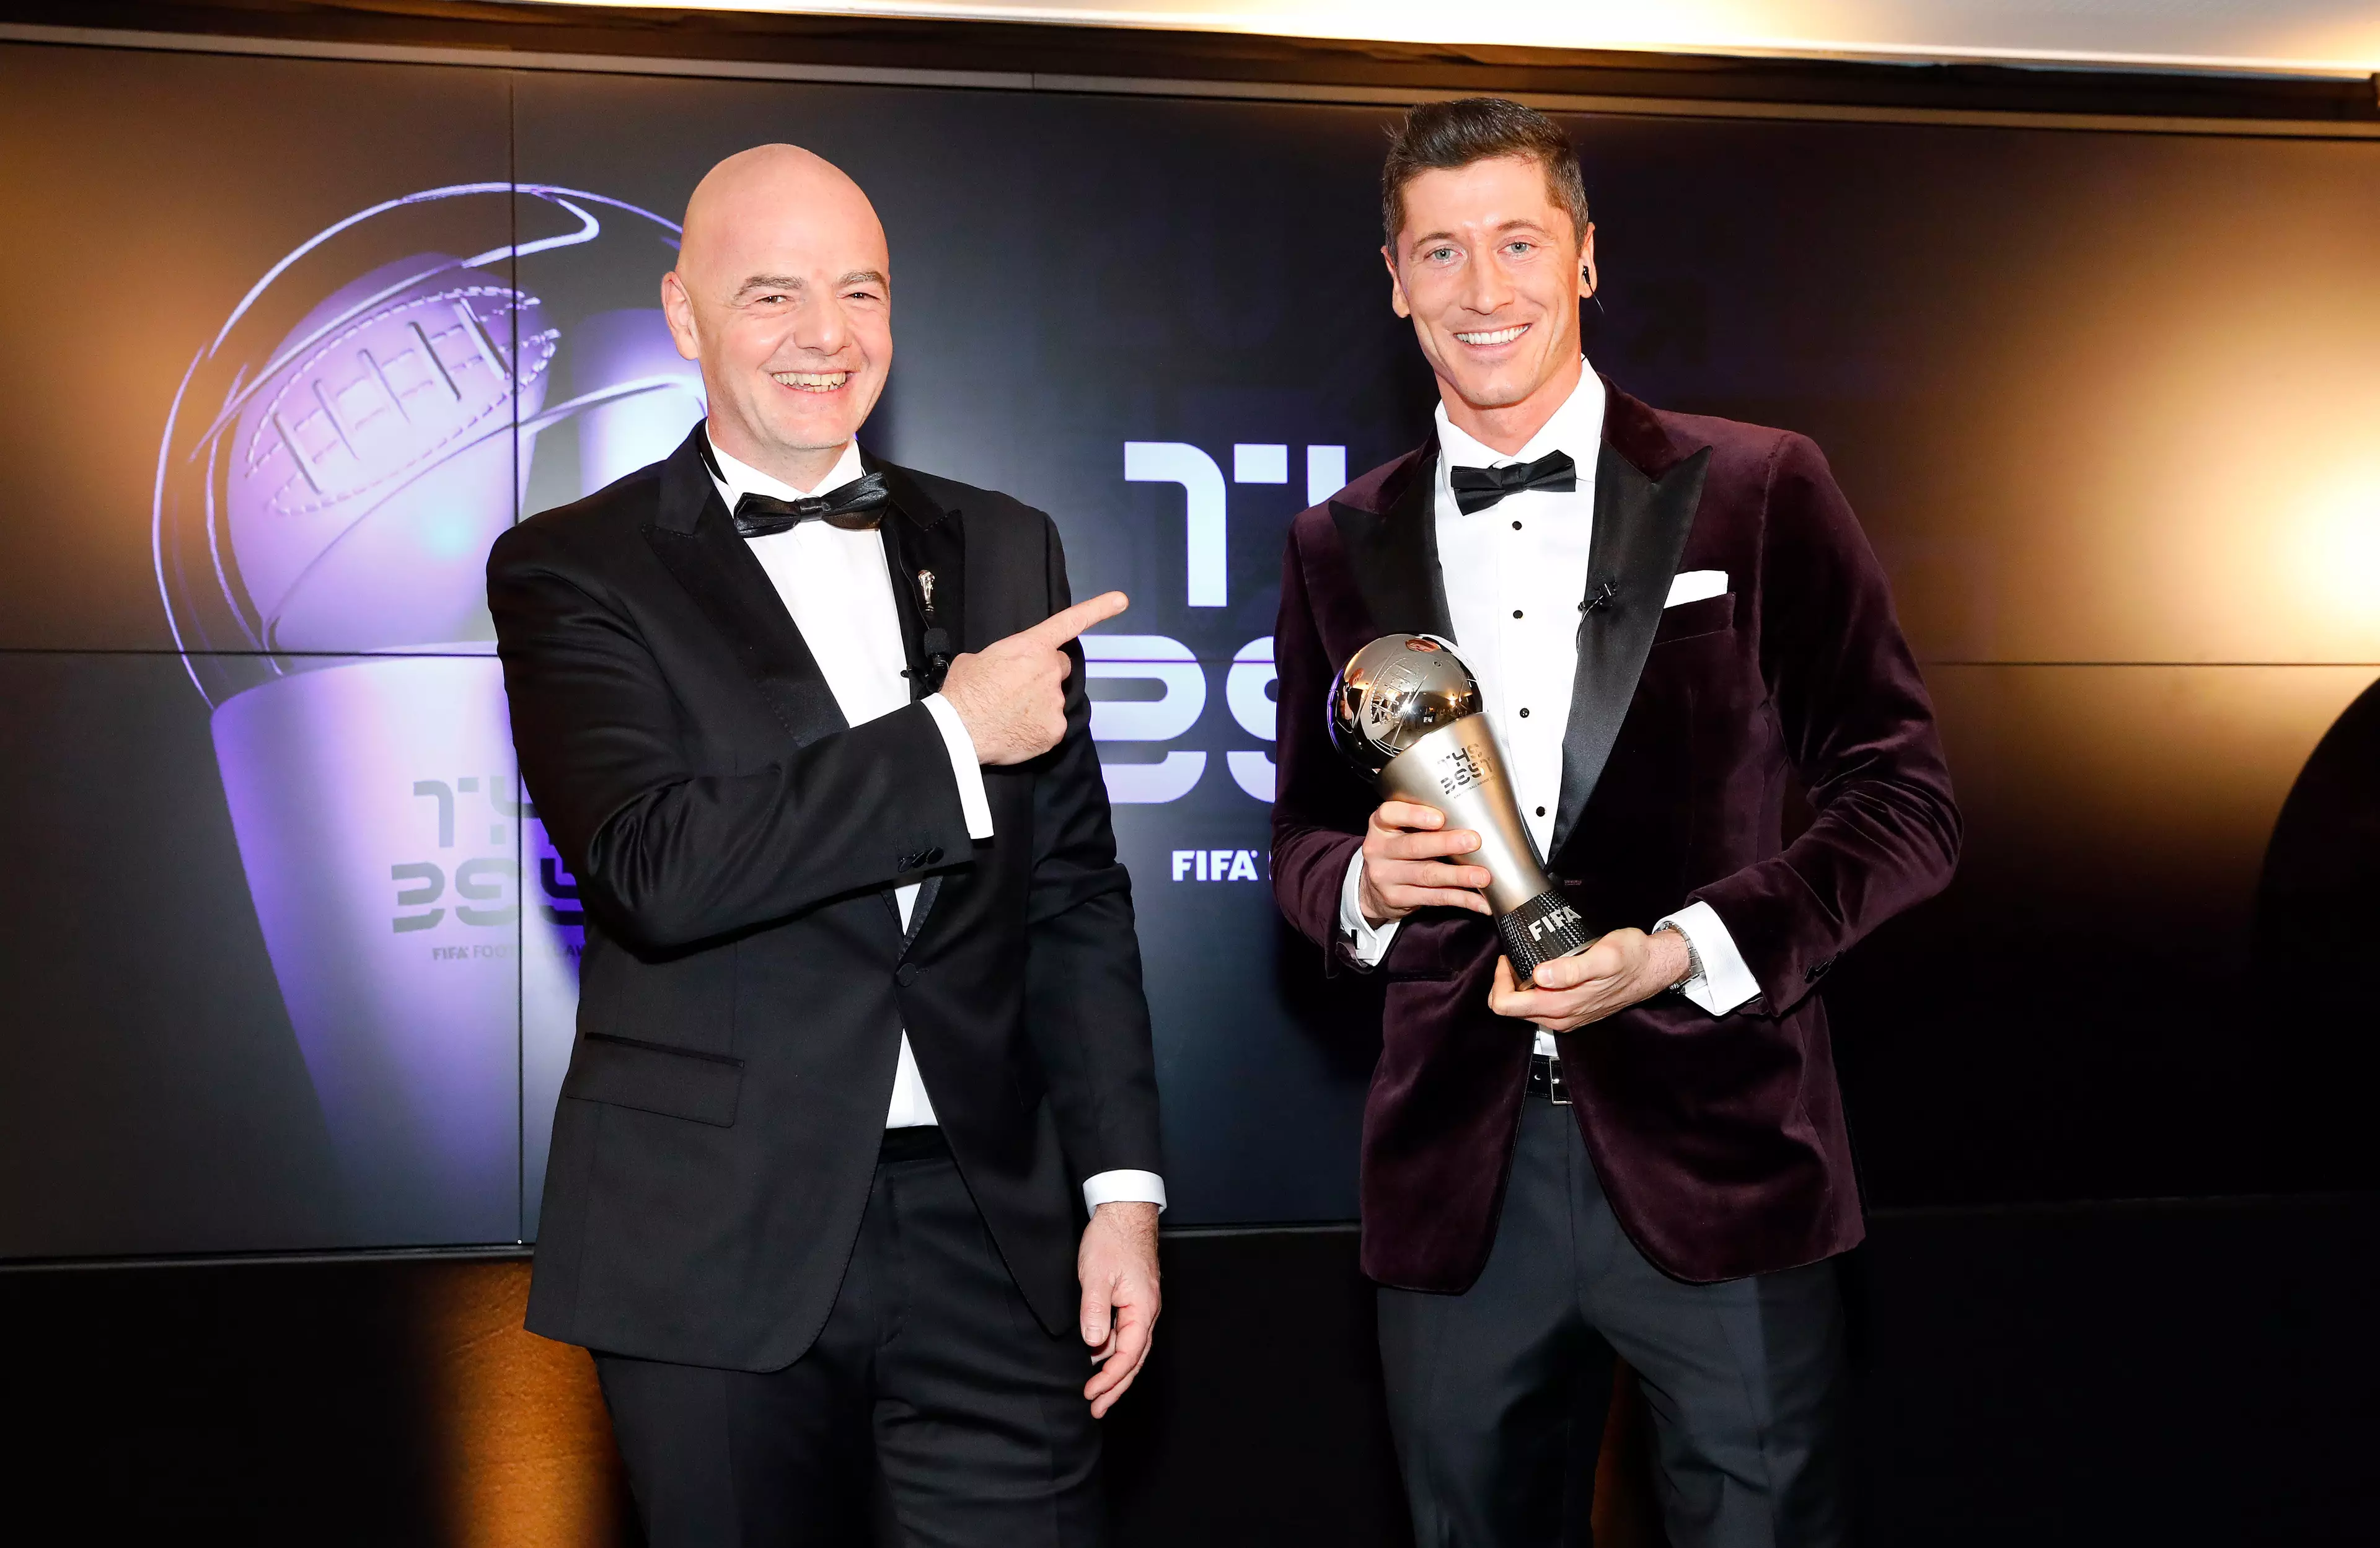 Lewandowski did win FIFA's The Best award. Image: PA Images